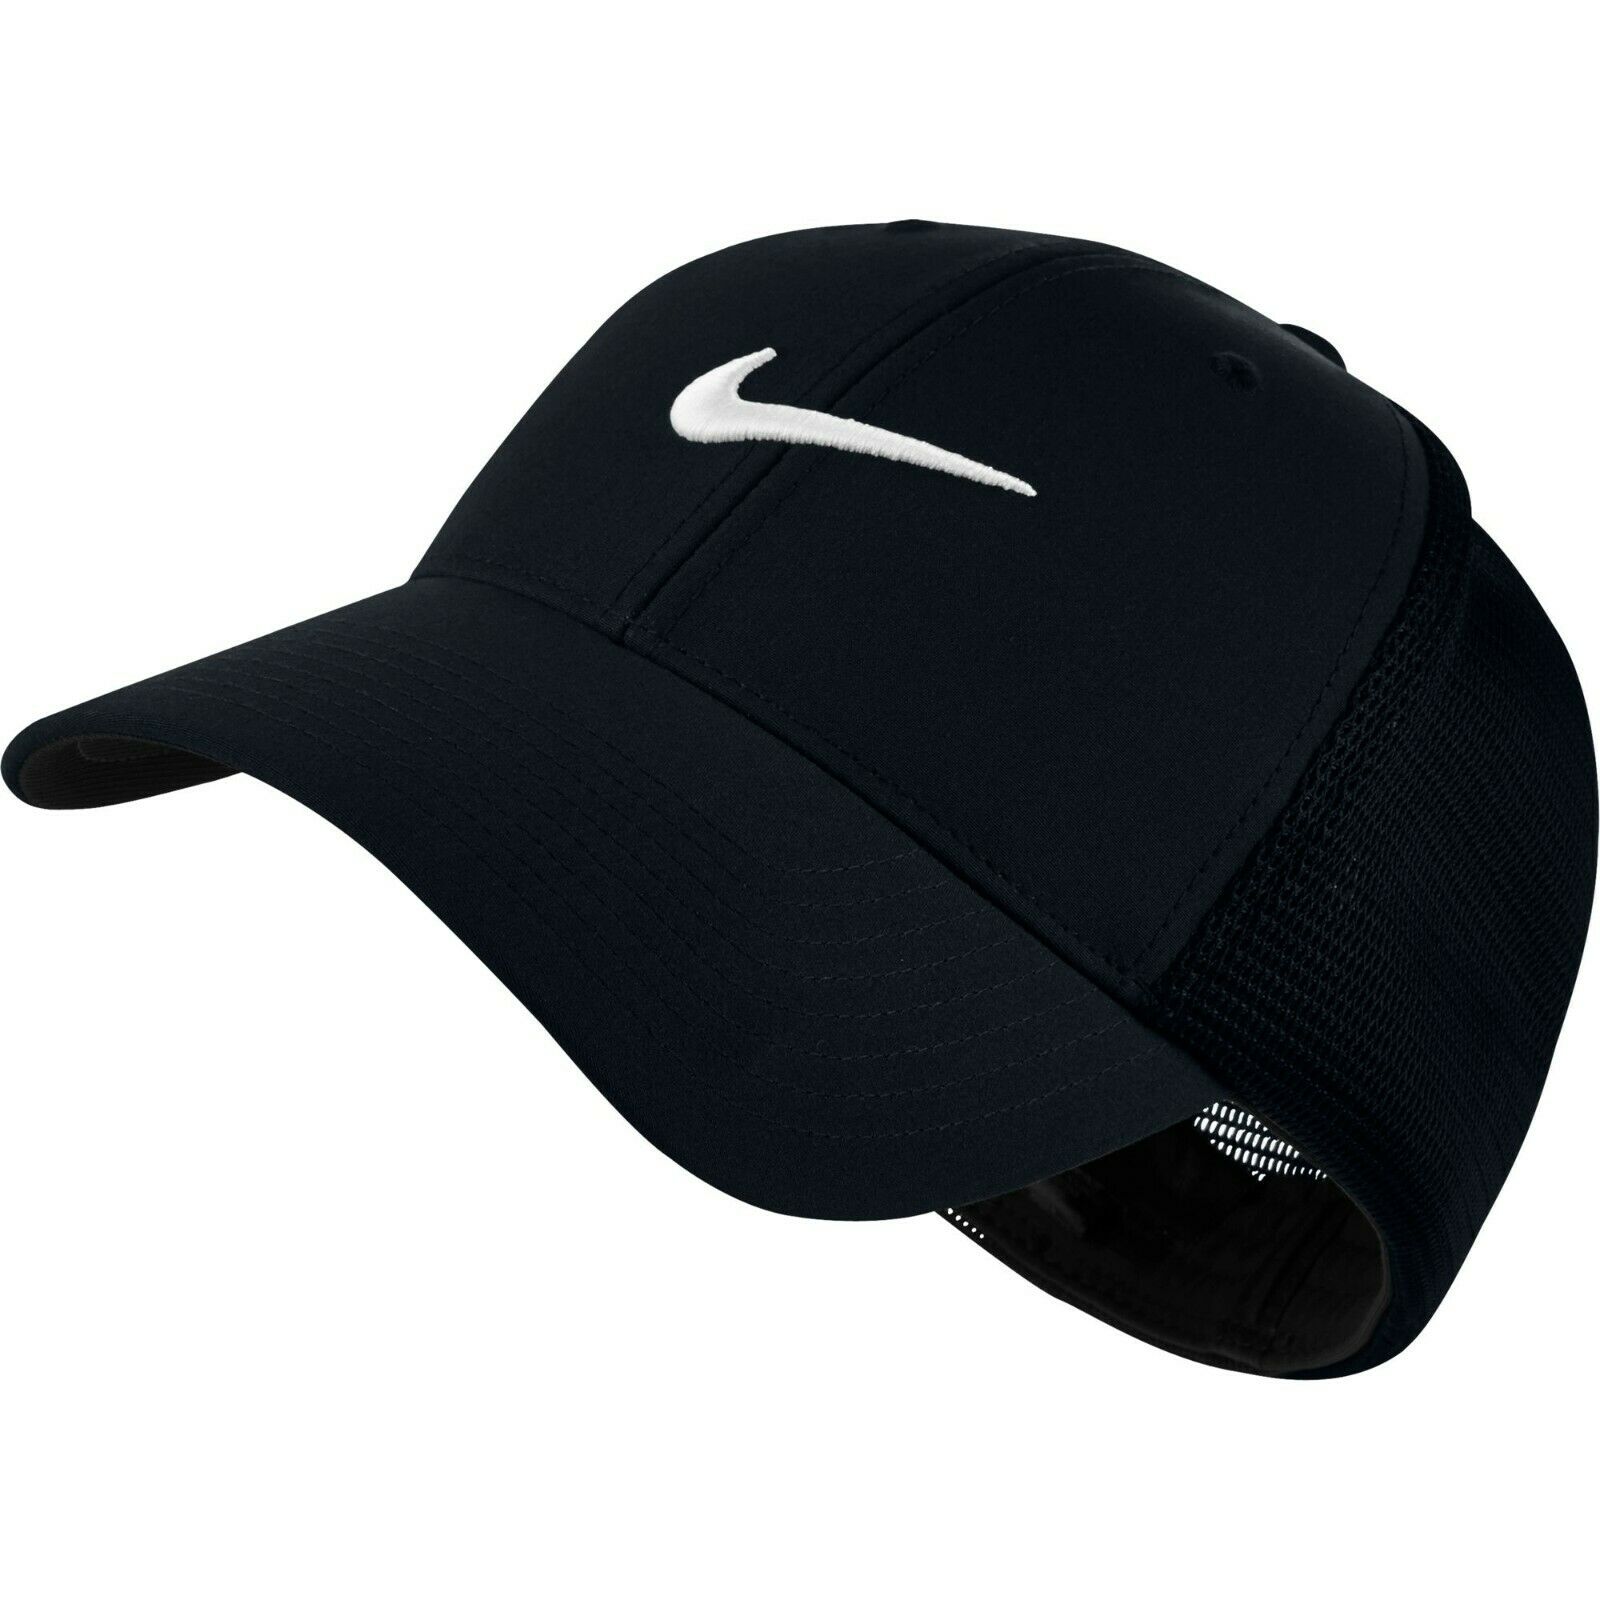 NIKE 2015 [S/M] Adult Unisex Legacy91 Tour Golf Hat, Black/White, VALLEYSPORTING